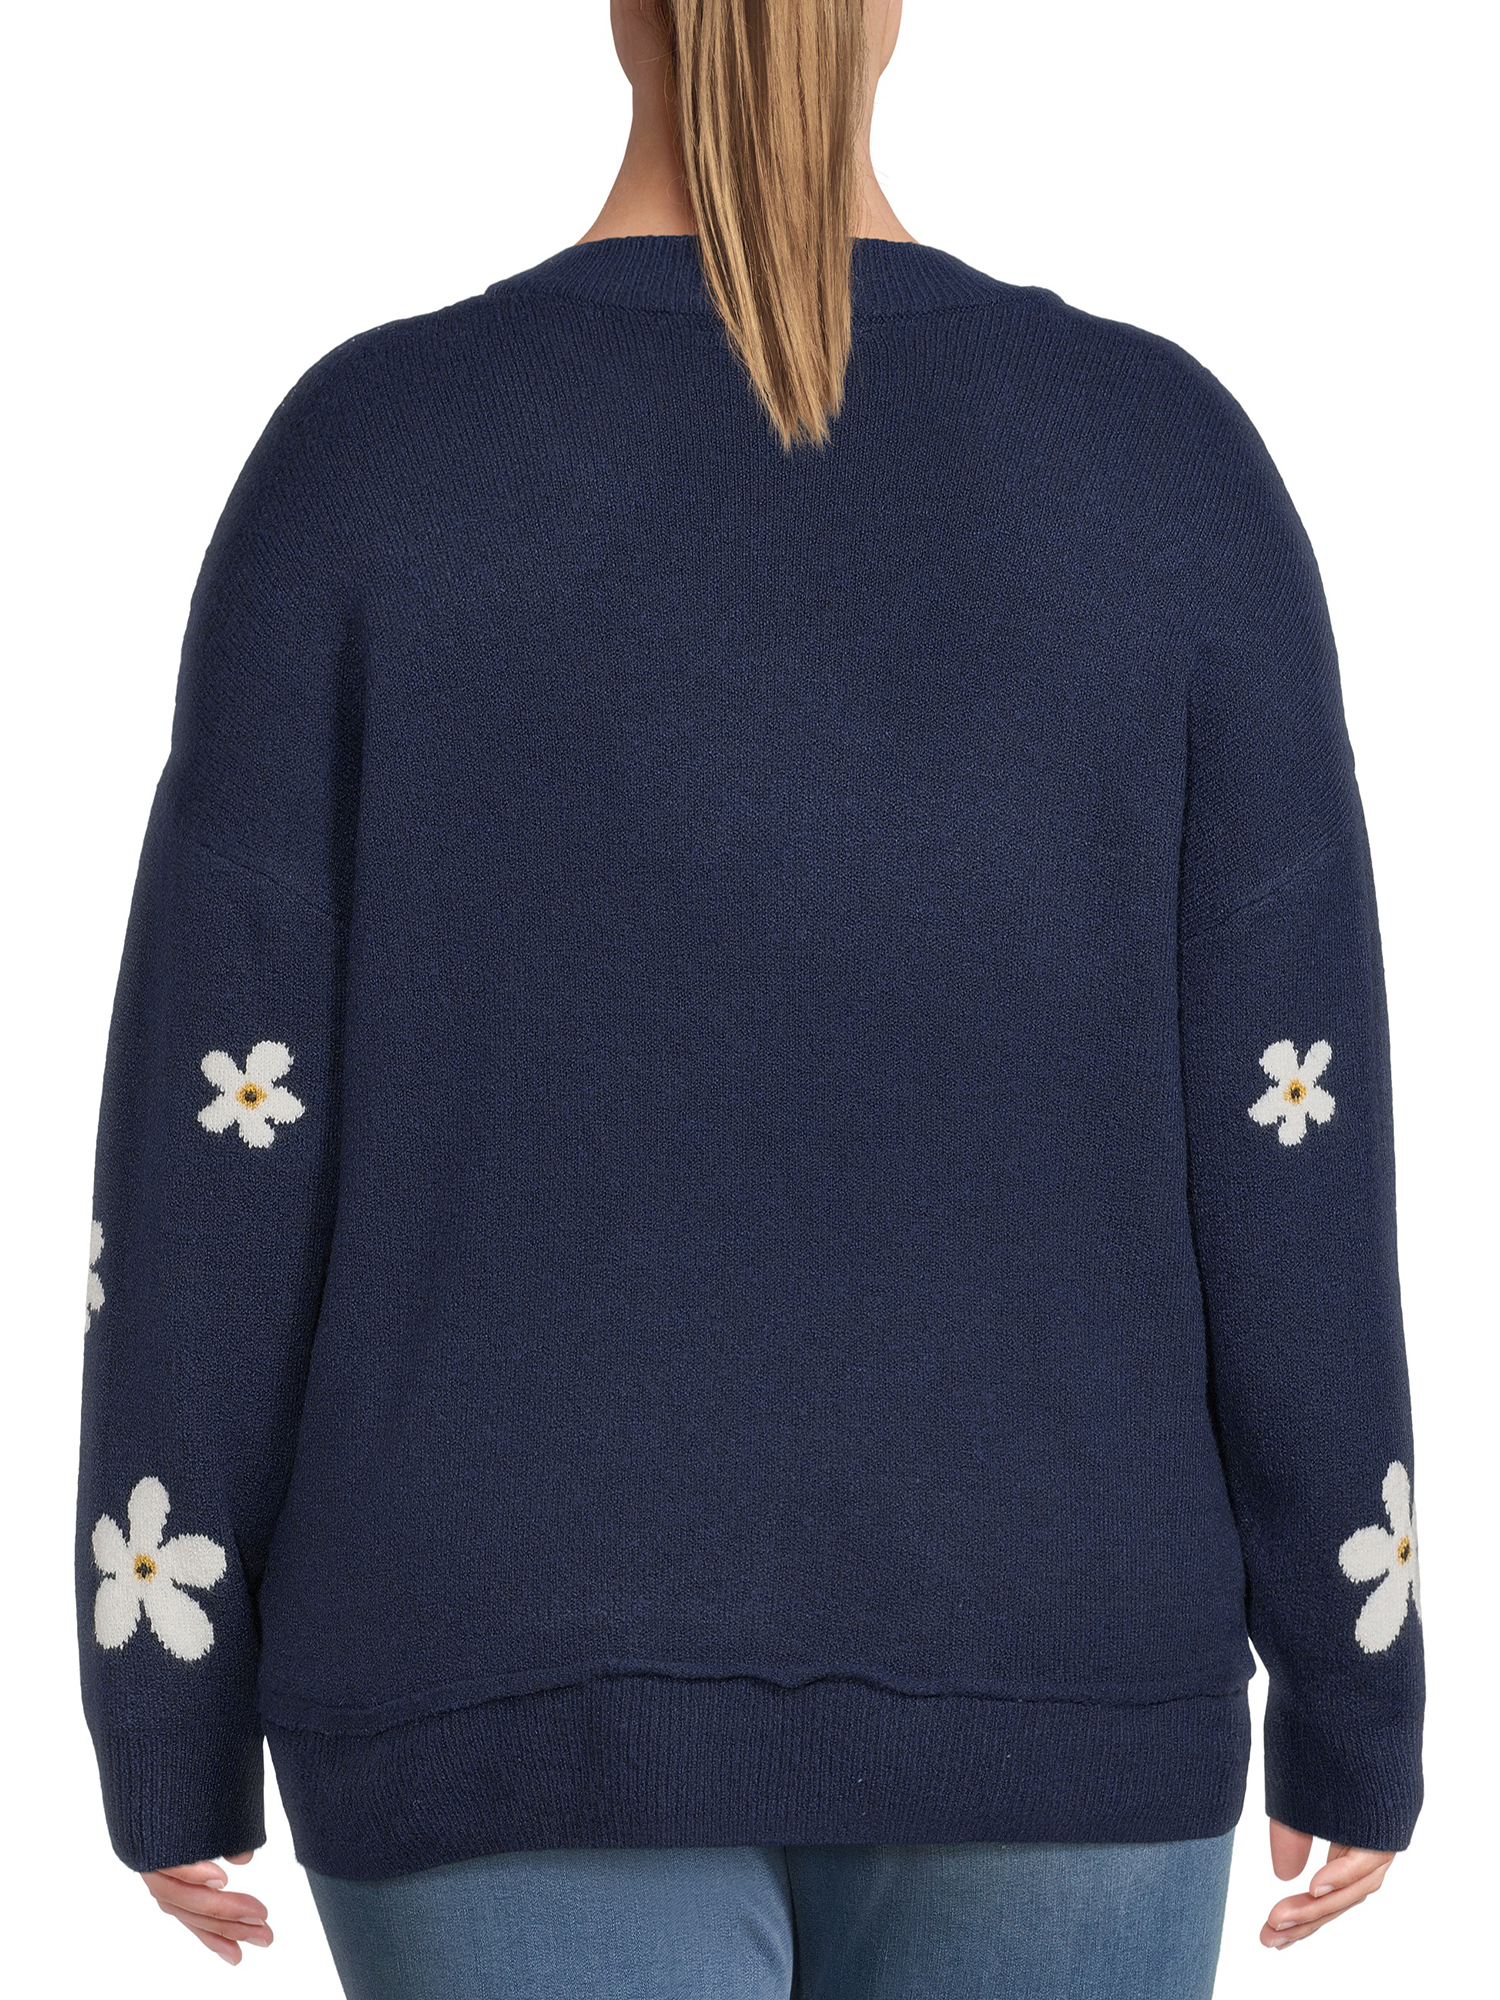 Terra & Sky Women's Plus Size Drop Shoulder Print Sweater, Midweight - image 4 of 5